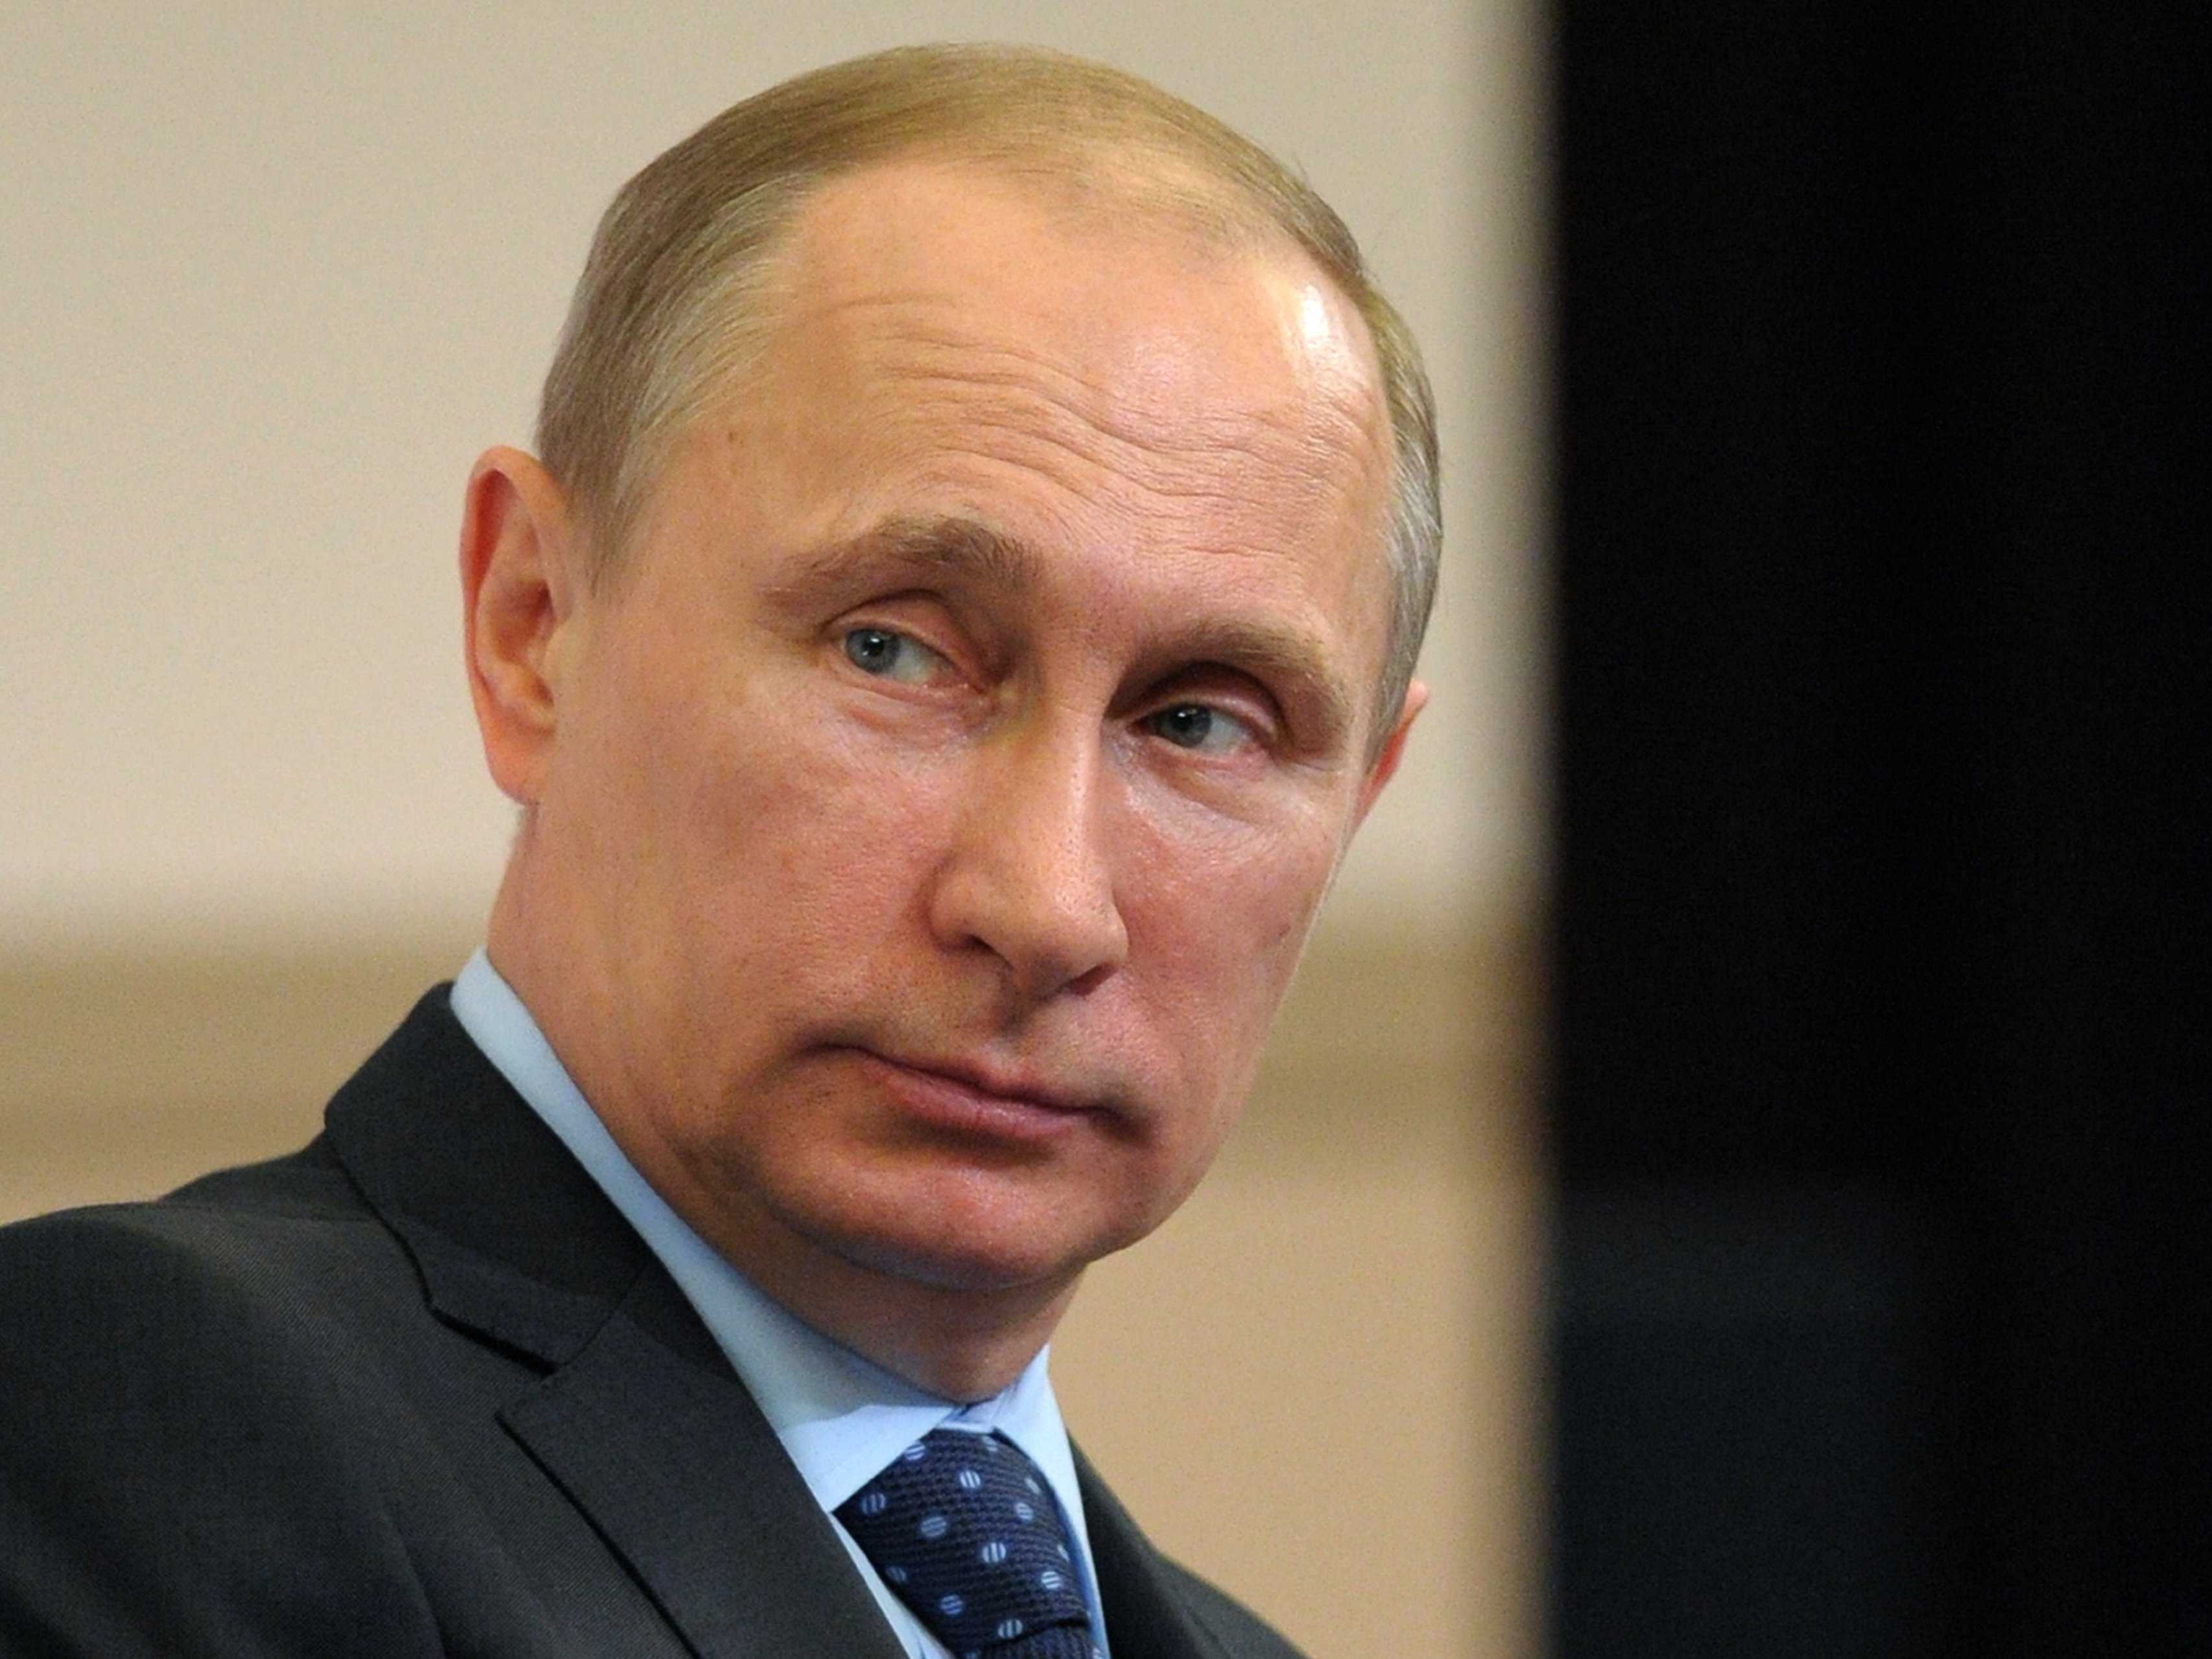 Putin: more U.S. sanctions would be harmful, talk of retaliation premature